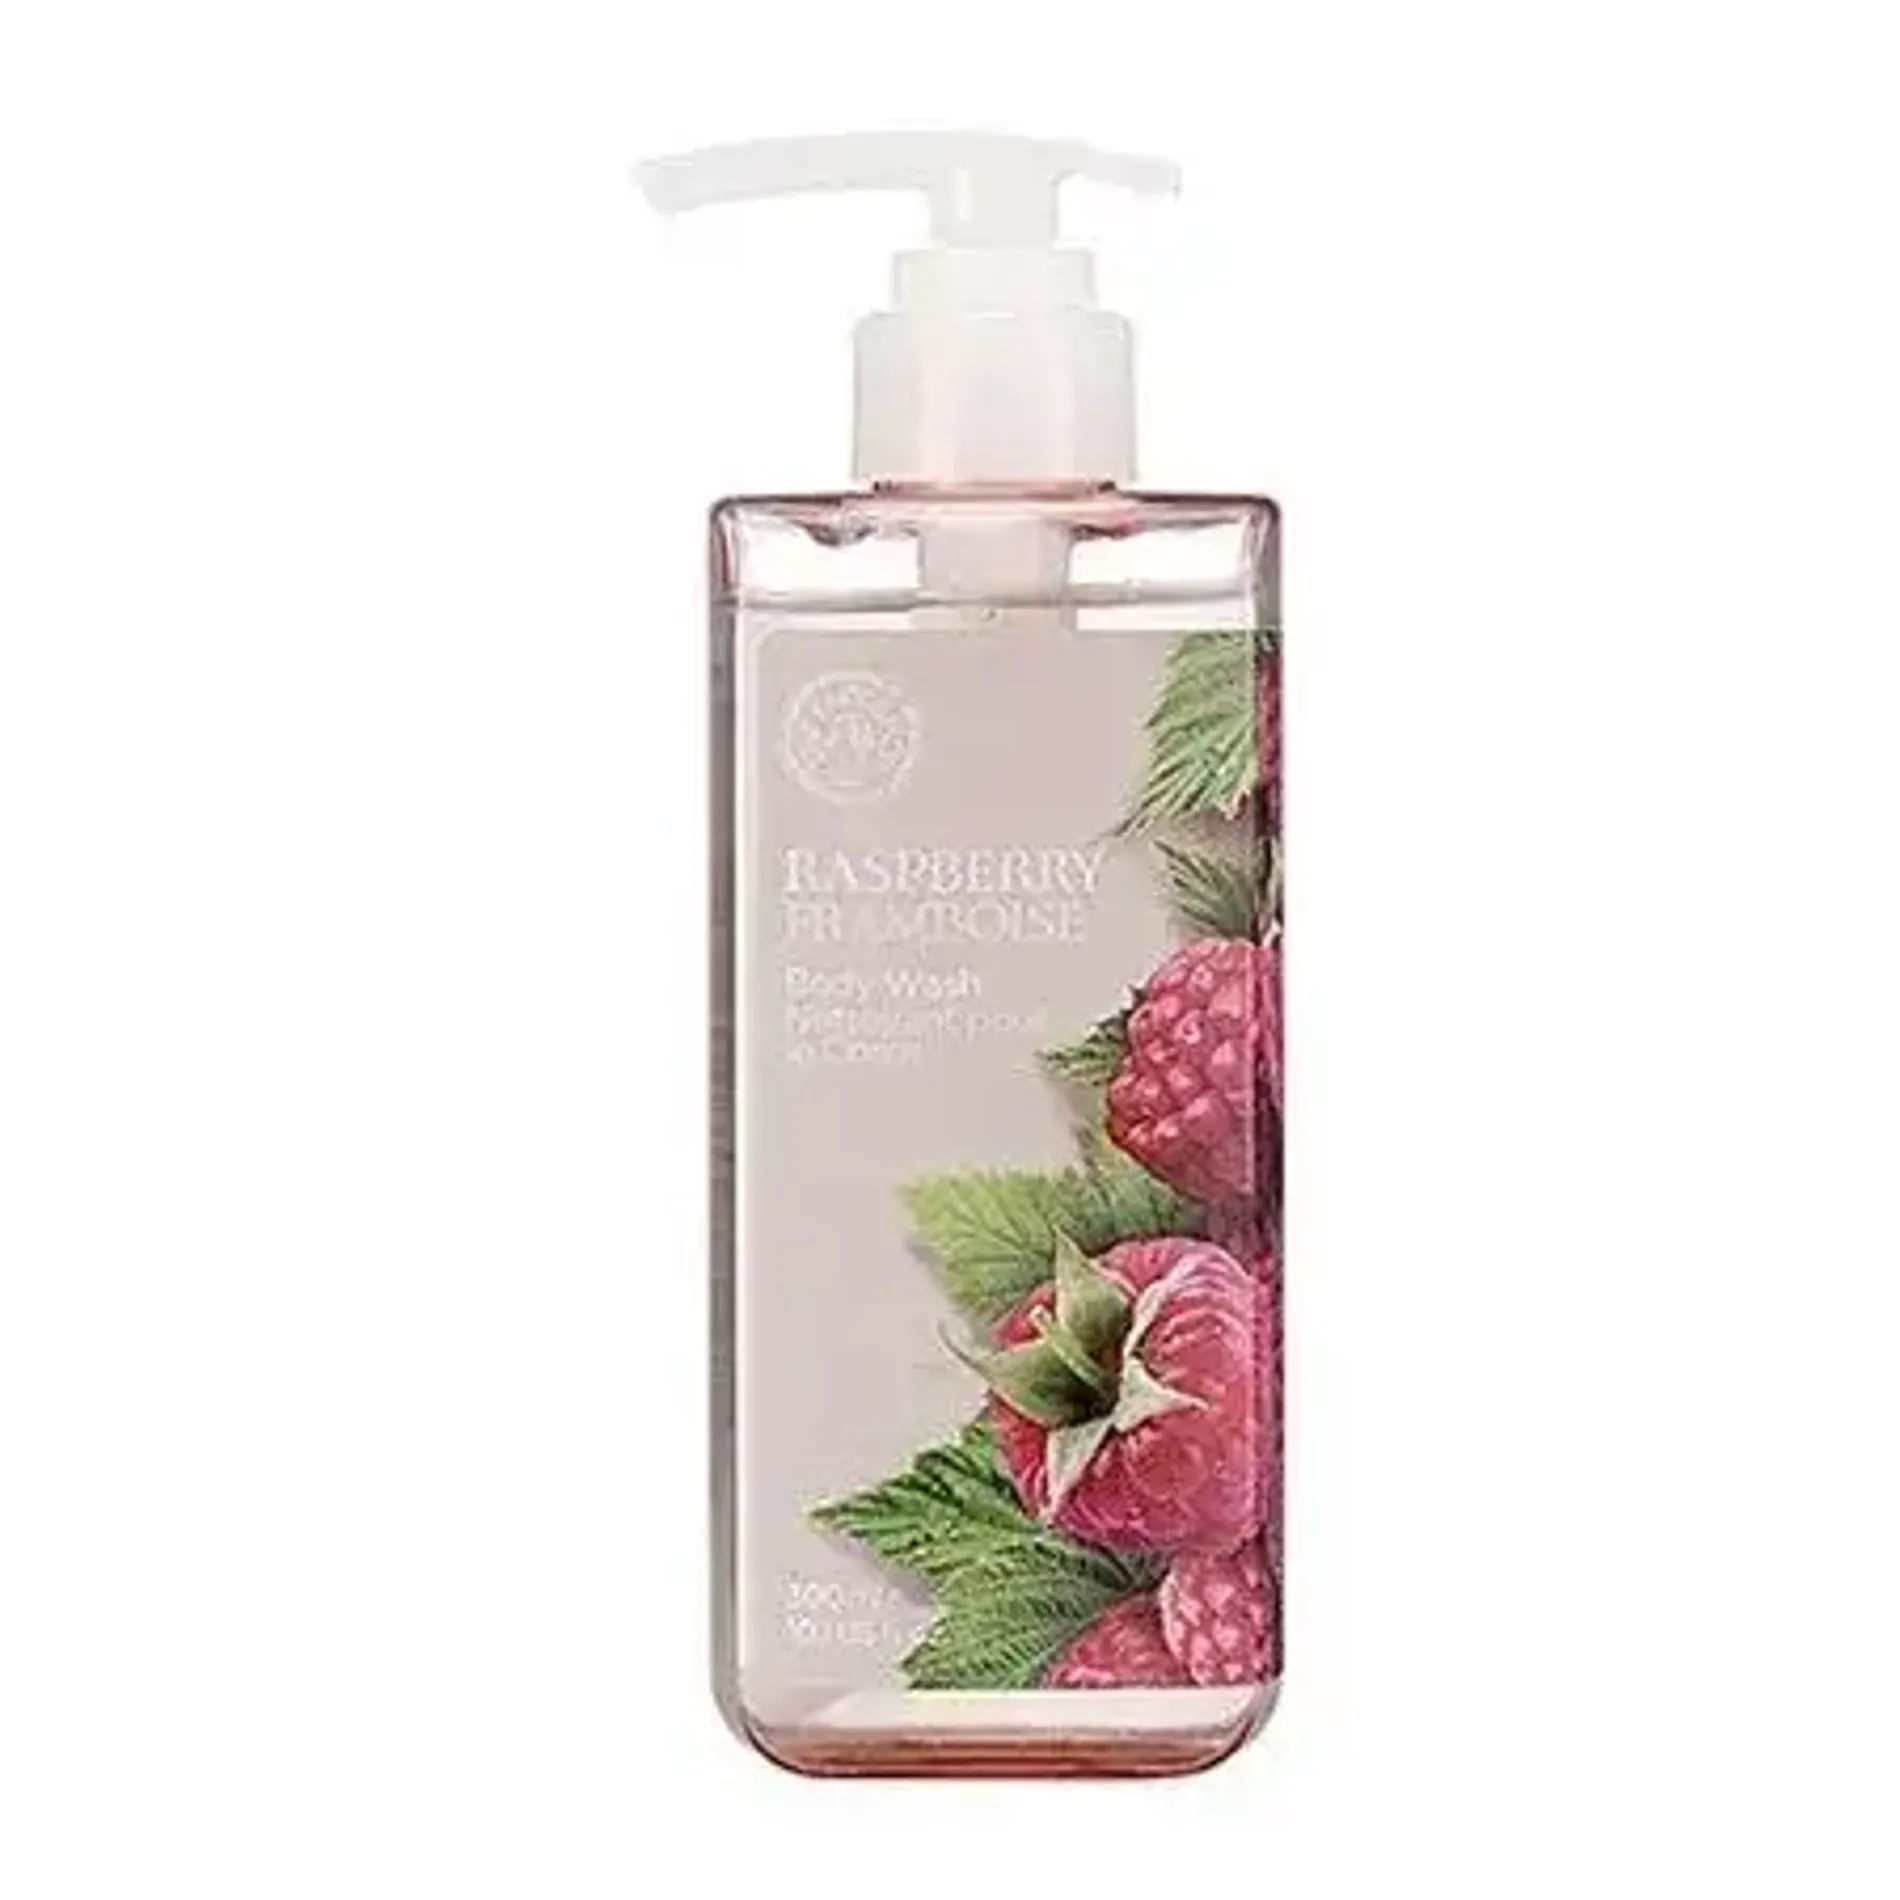 gift-gel-tam-chong-lao-hoa-thefaceshop-raspberry-body-wash-300ml-1